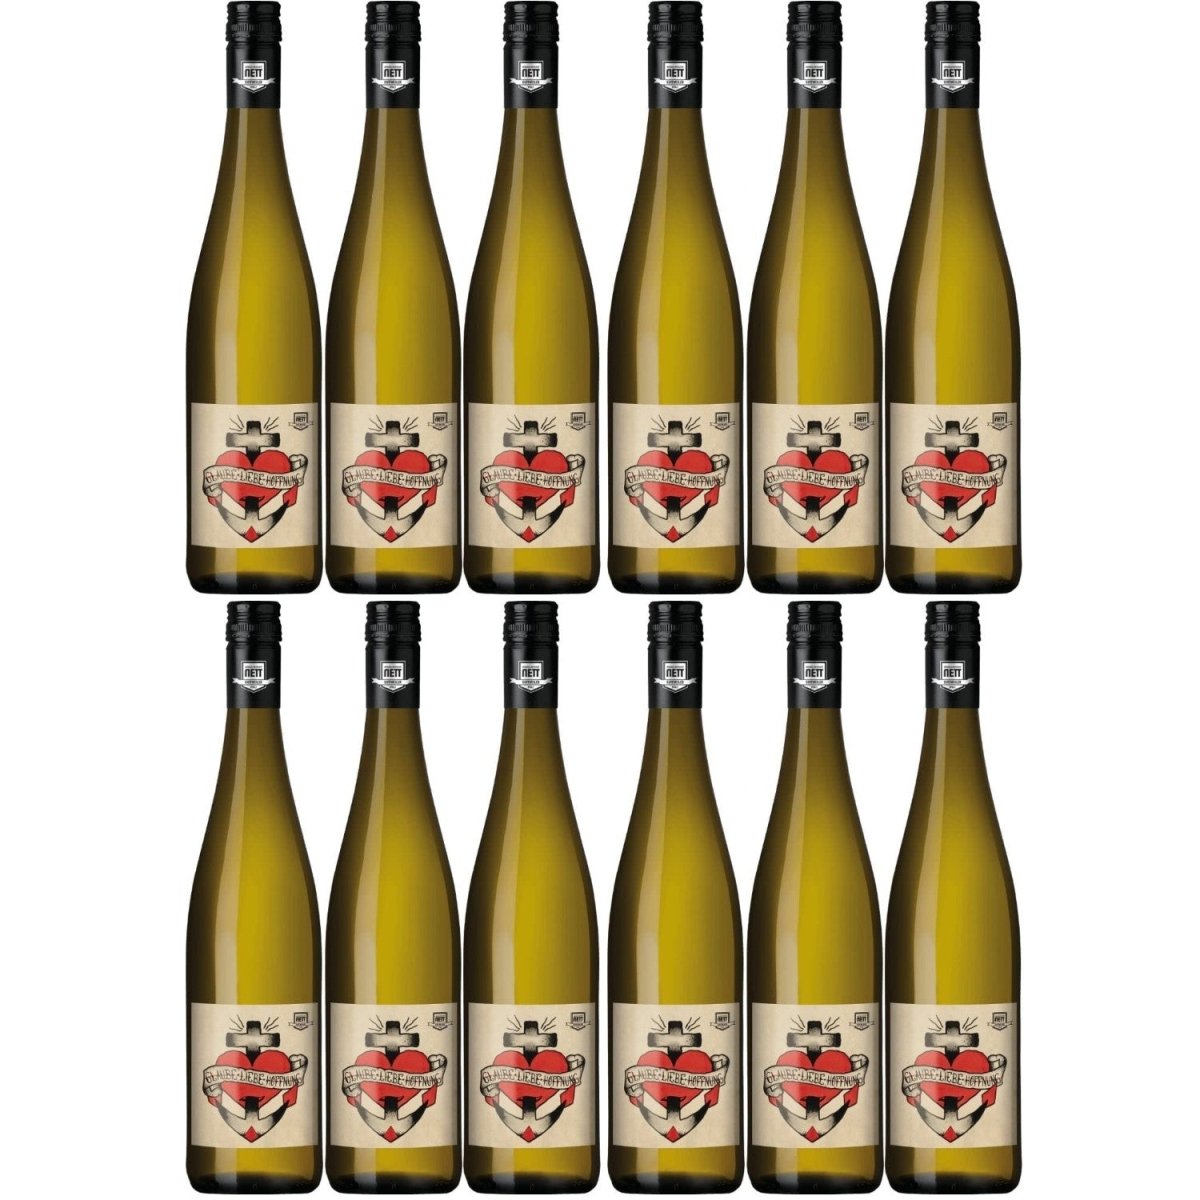 Bergdolt-Reif & Nett Glaube-Liebe-Hoffnung Riesling Weißwein Wein trocken Pfalz (12 x 0,75l) - Versanel -